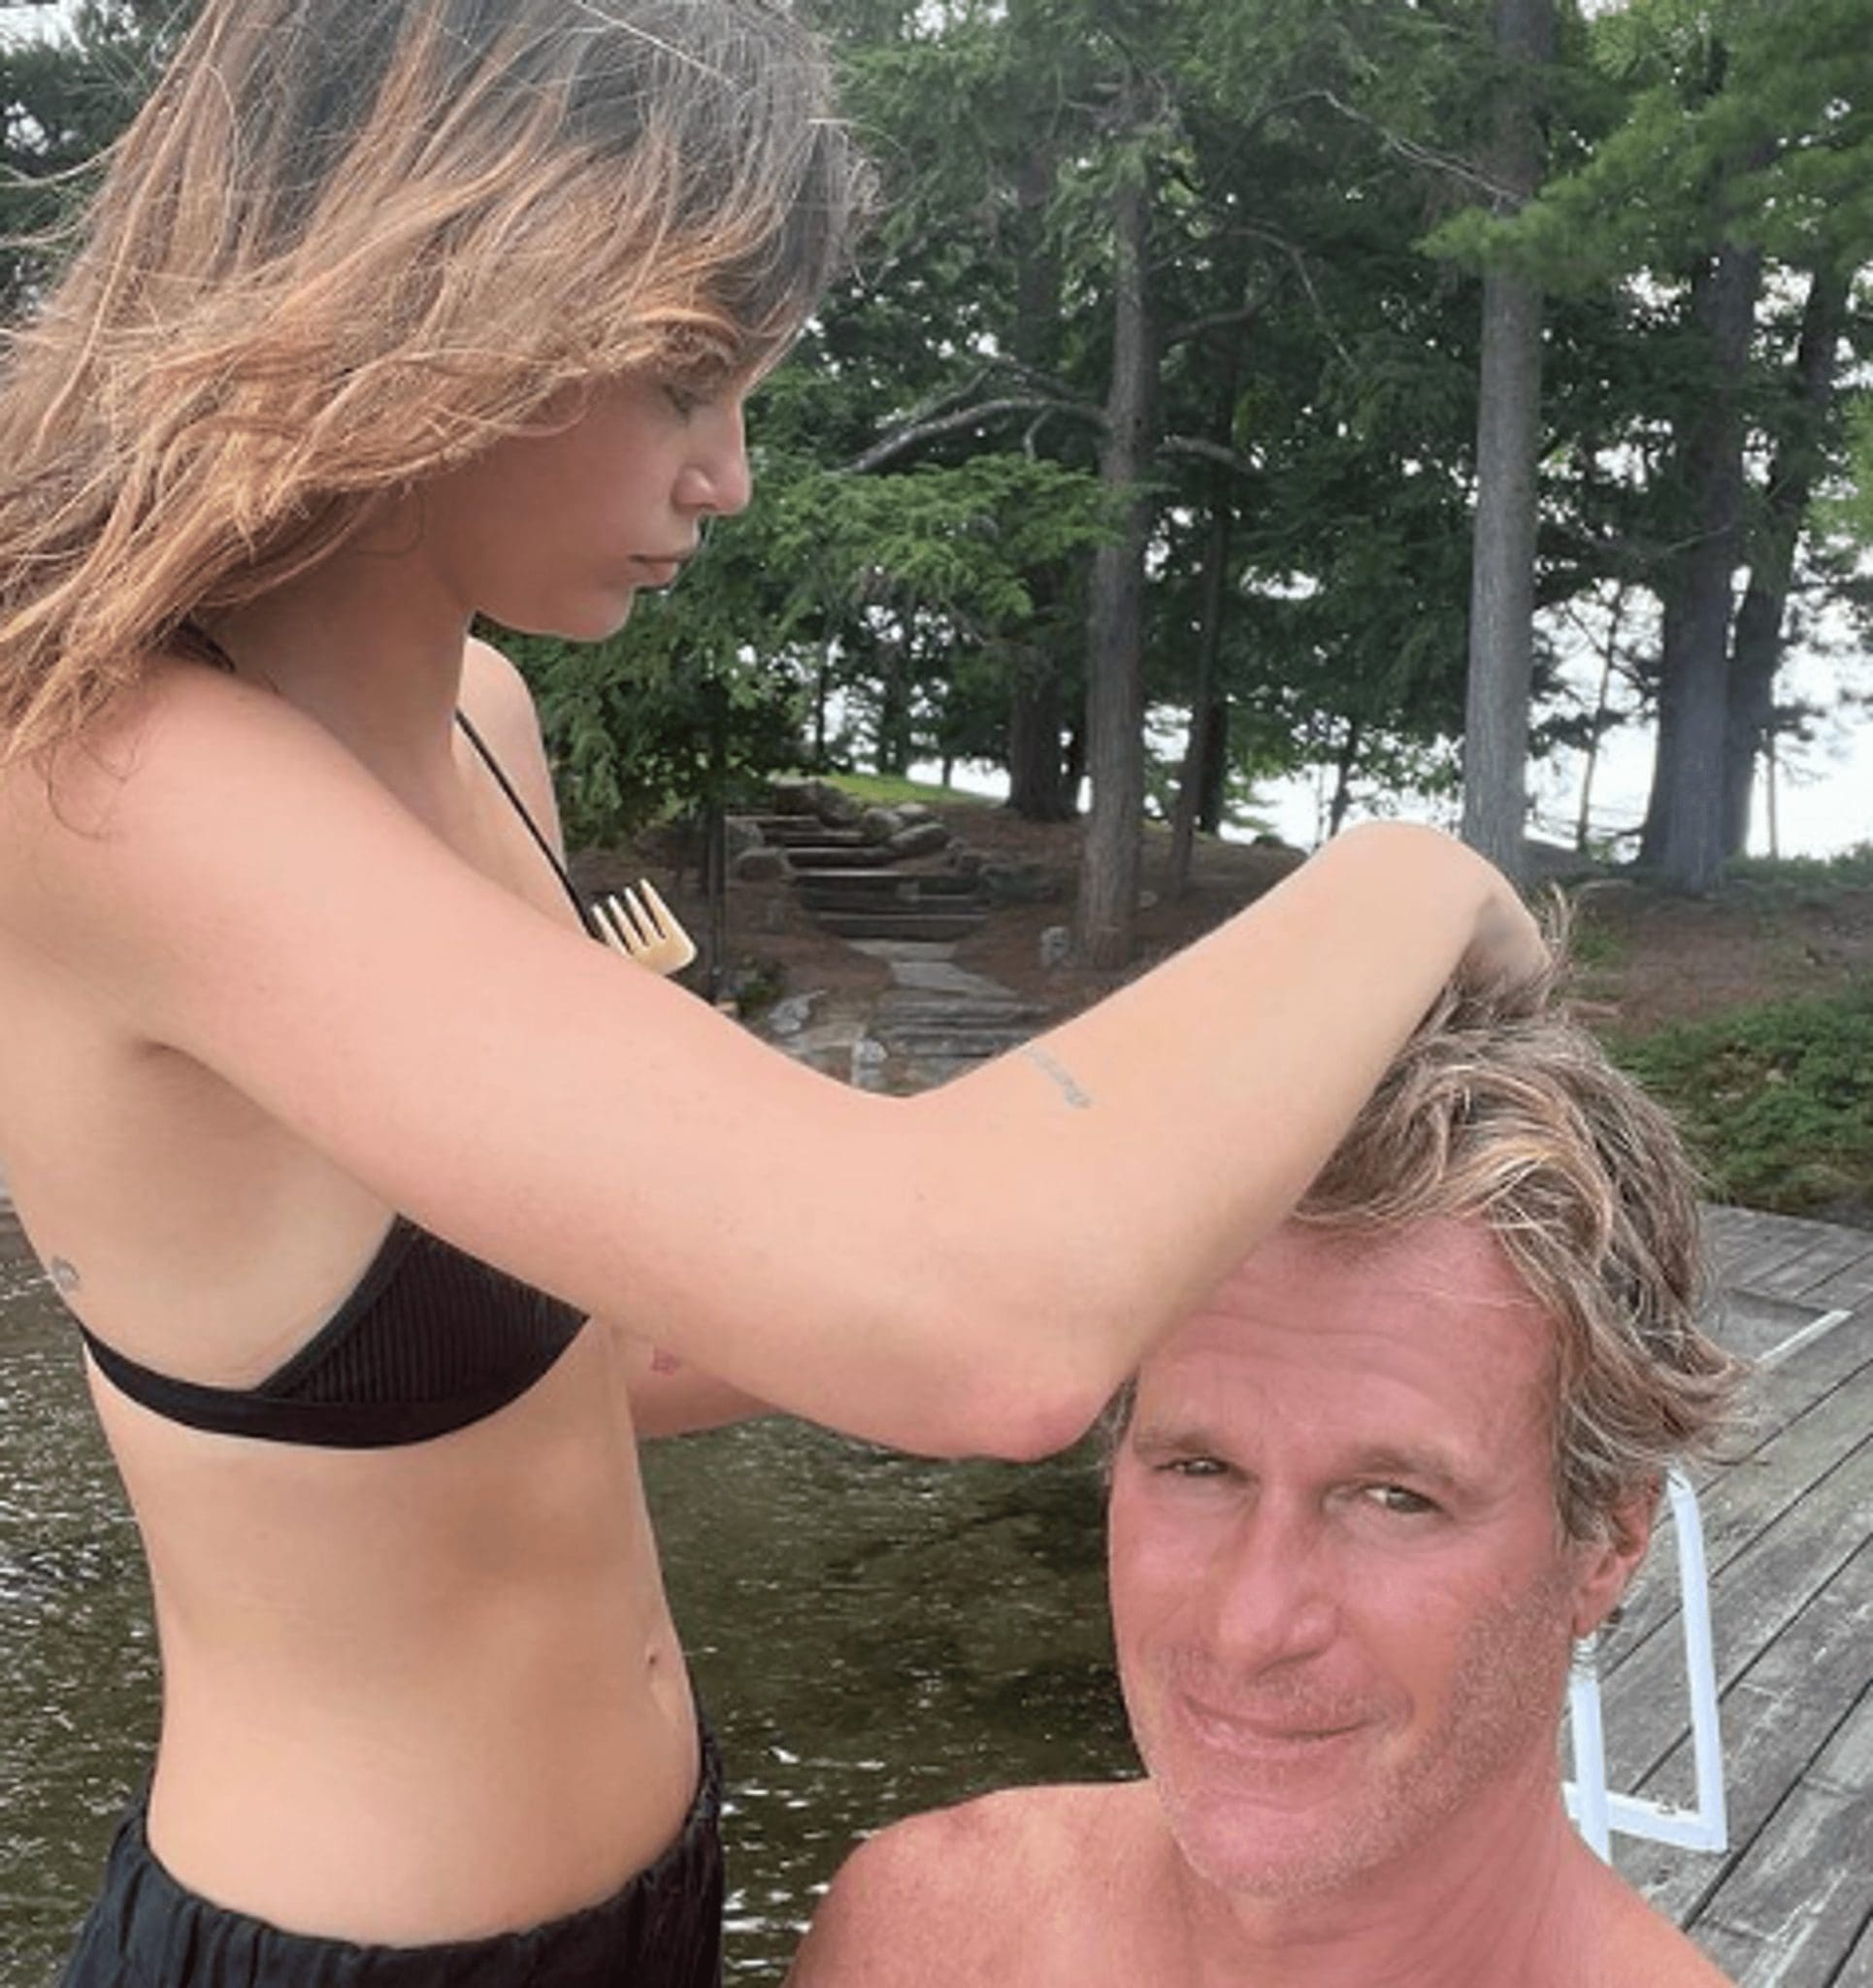 Rande Gerber Received An At-Home Haircut From Kaia Gerber